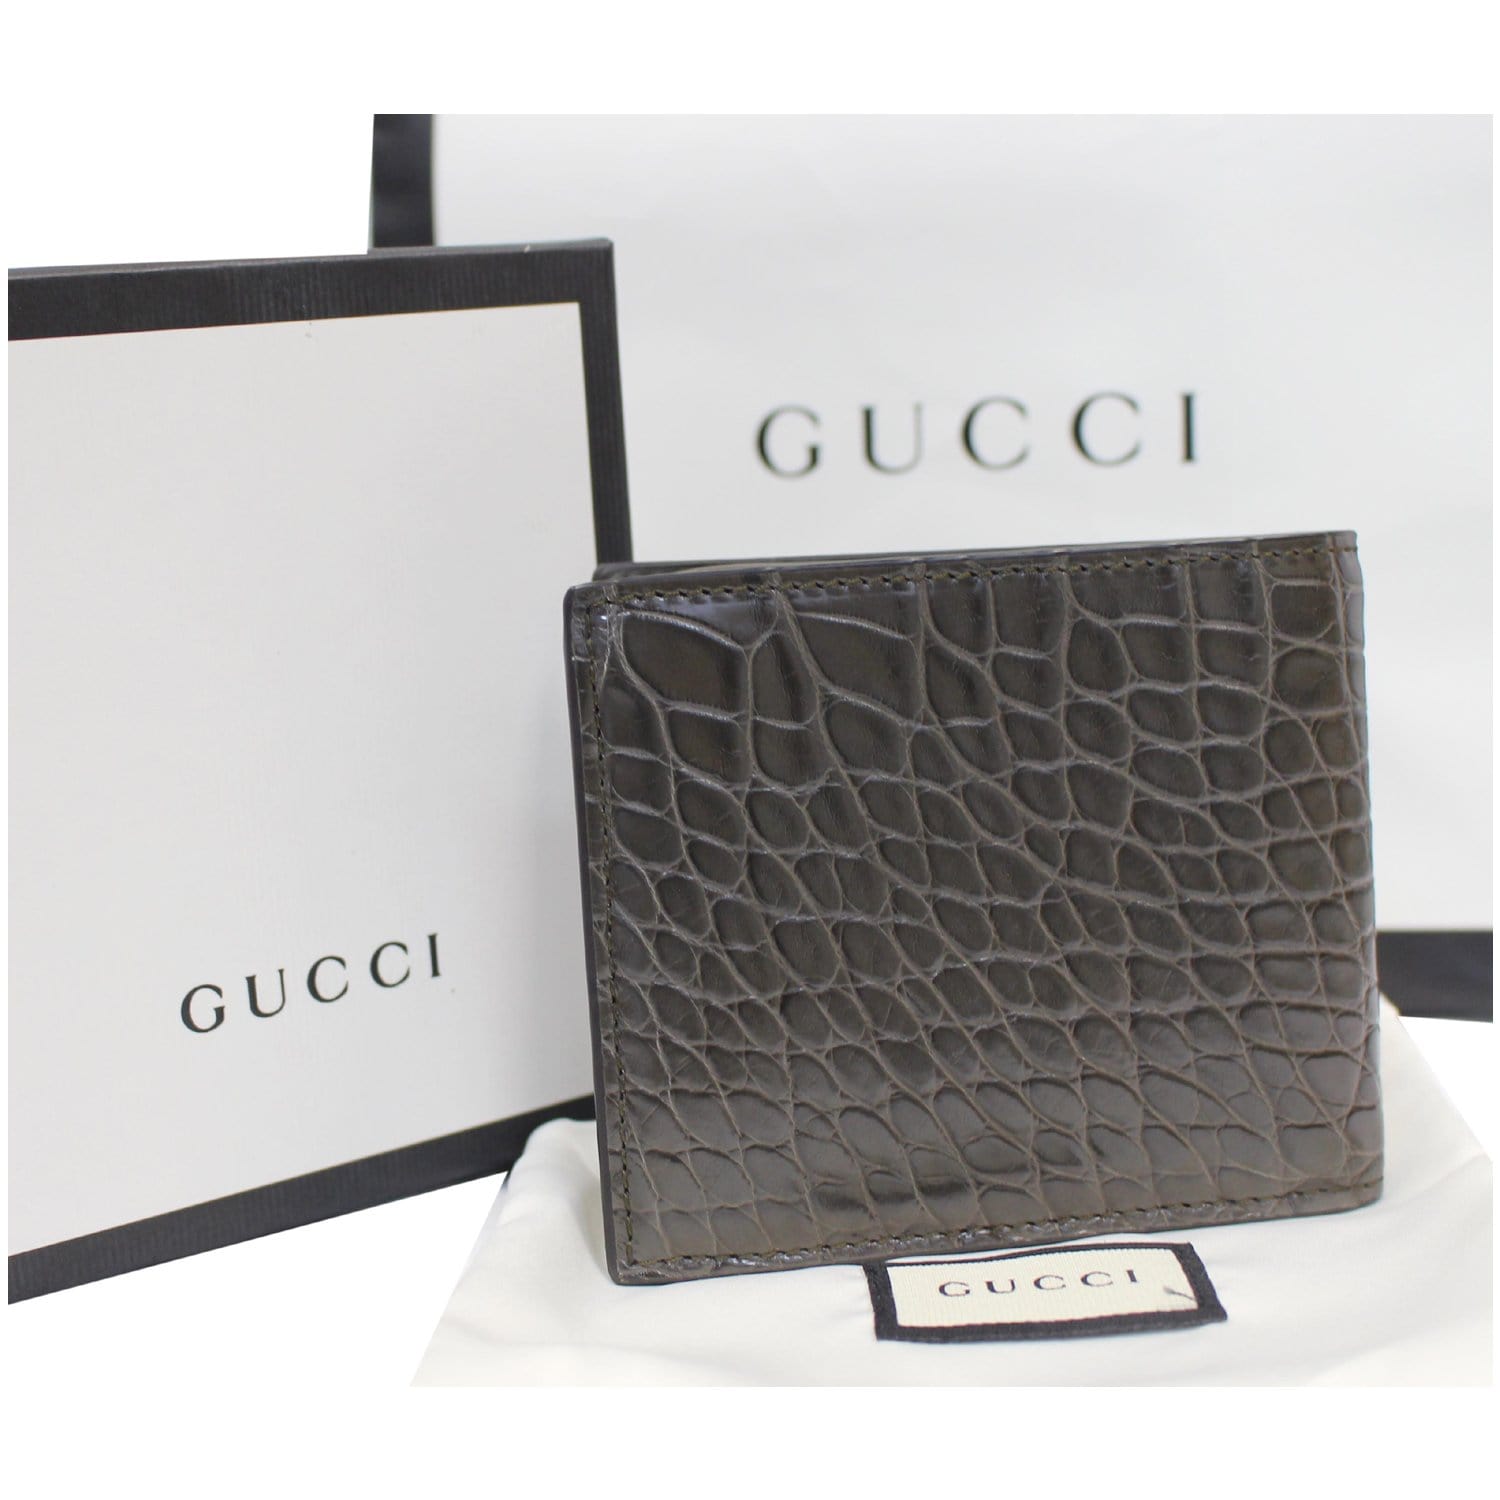 Gucci Men's Wallet  Gucci mens wallet, Wallet men, Wallet